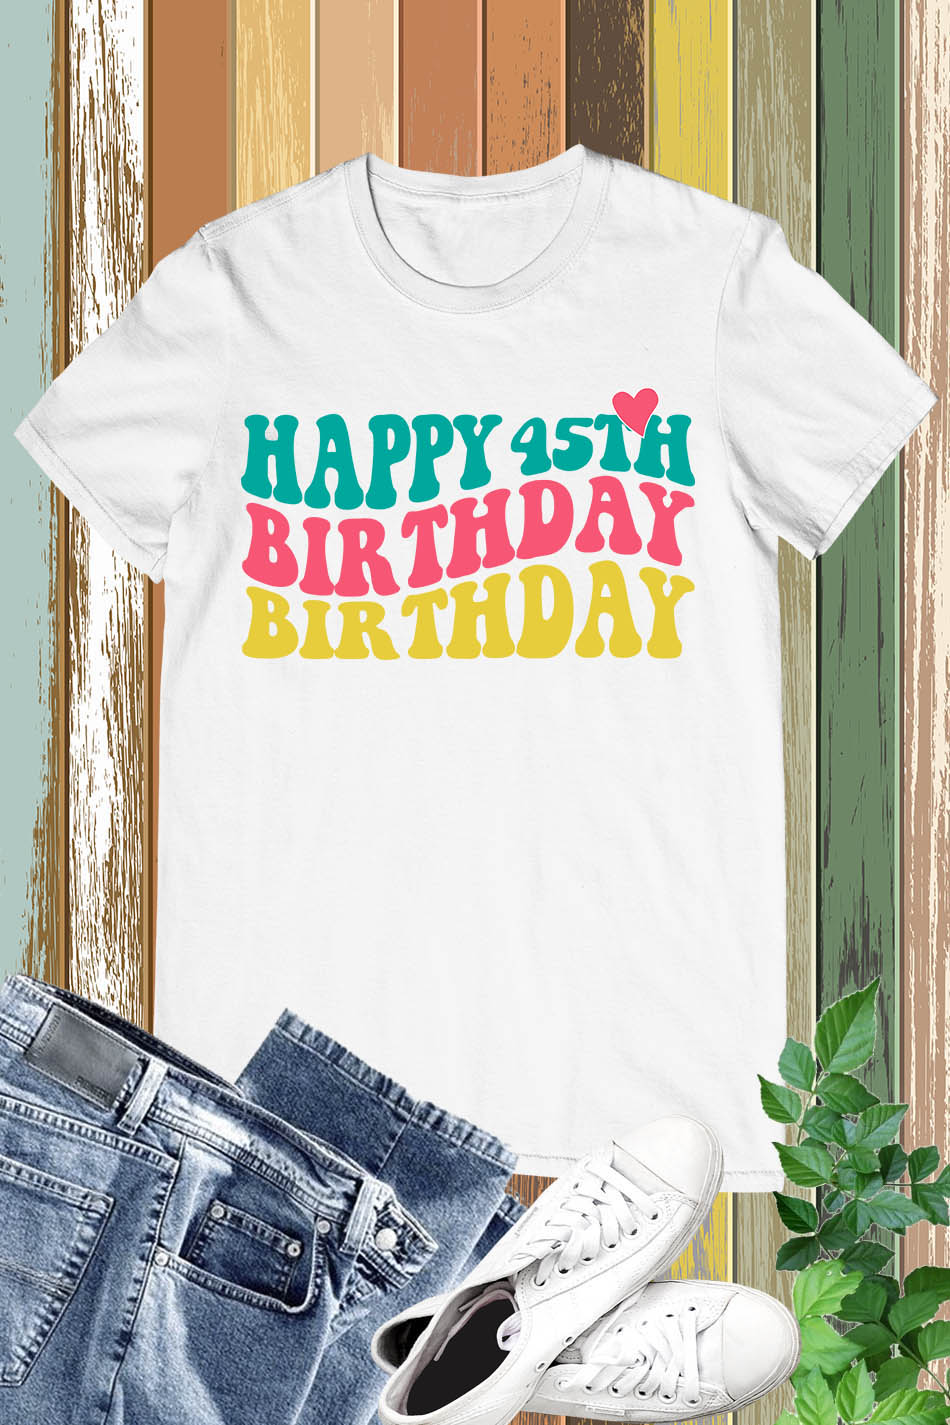 Happy 45th Birthday Shirt